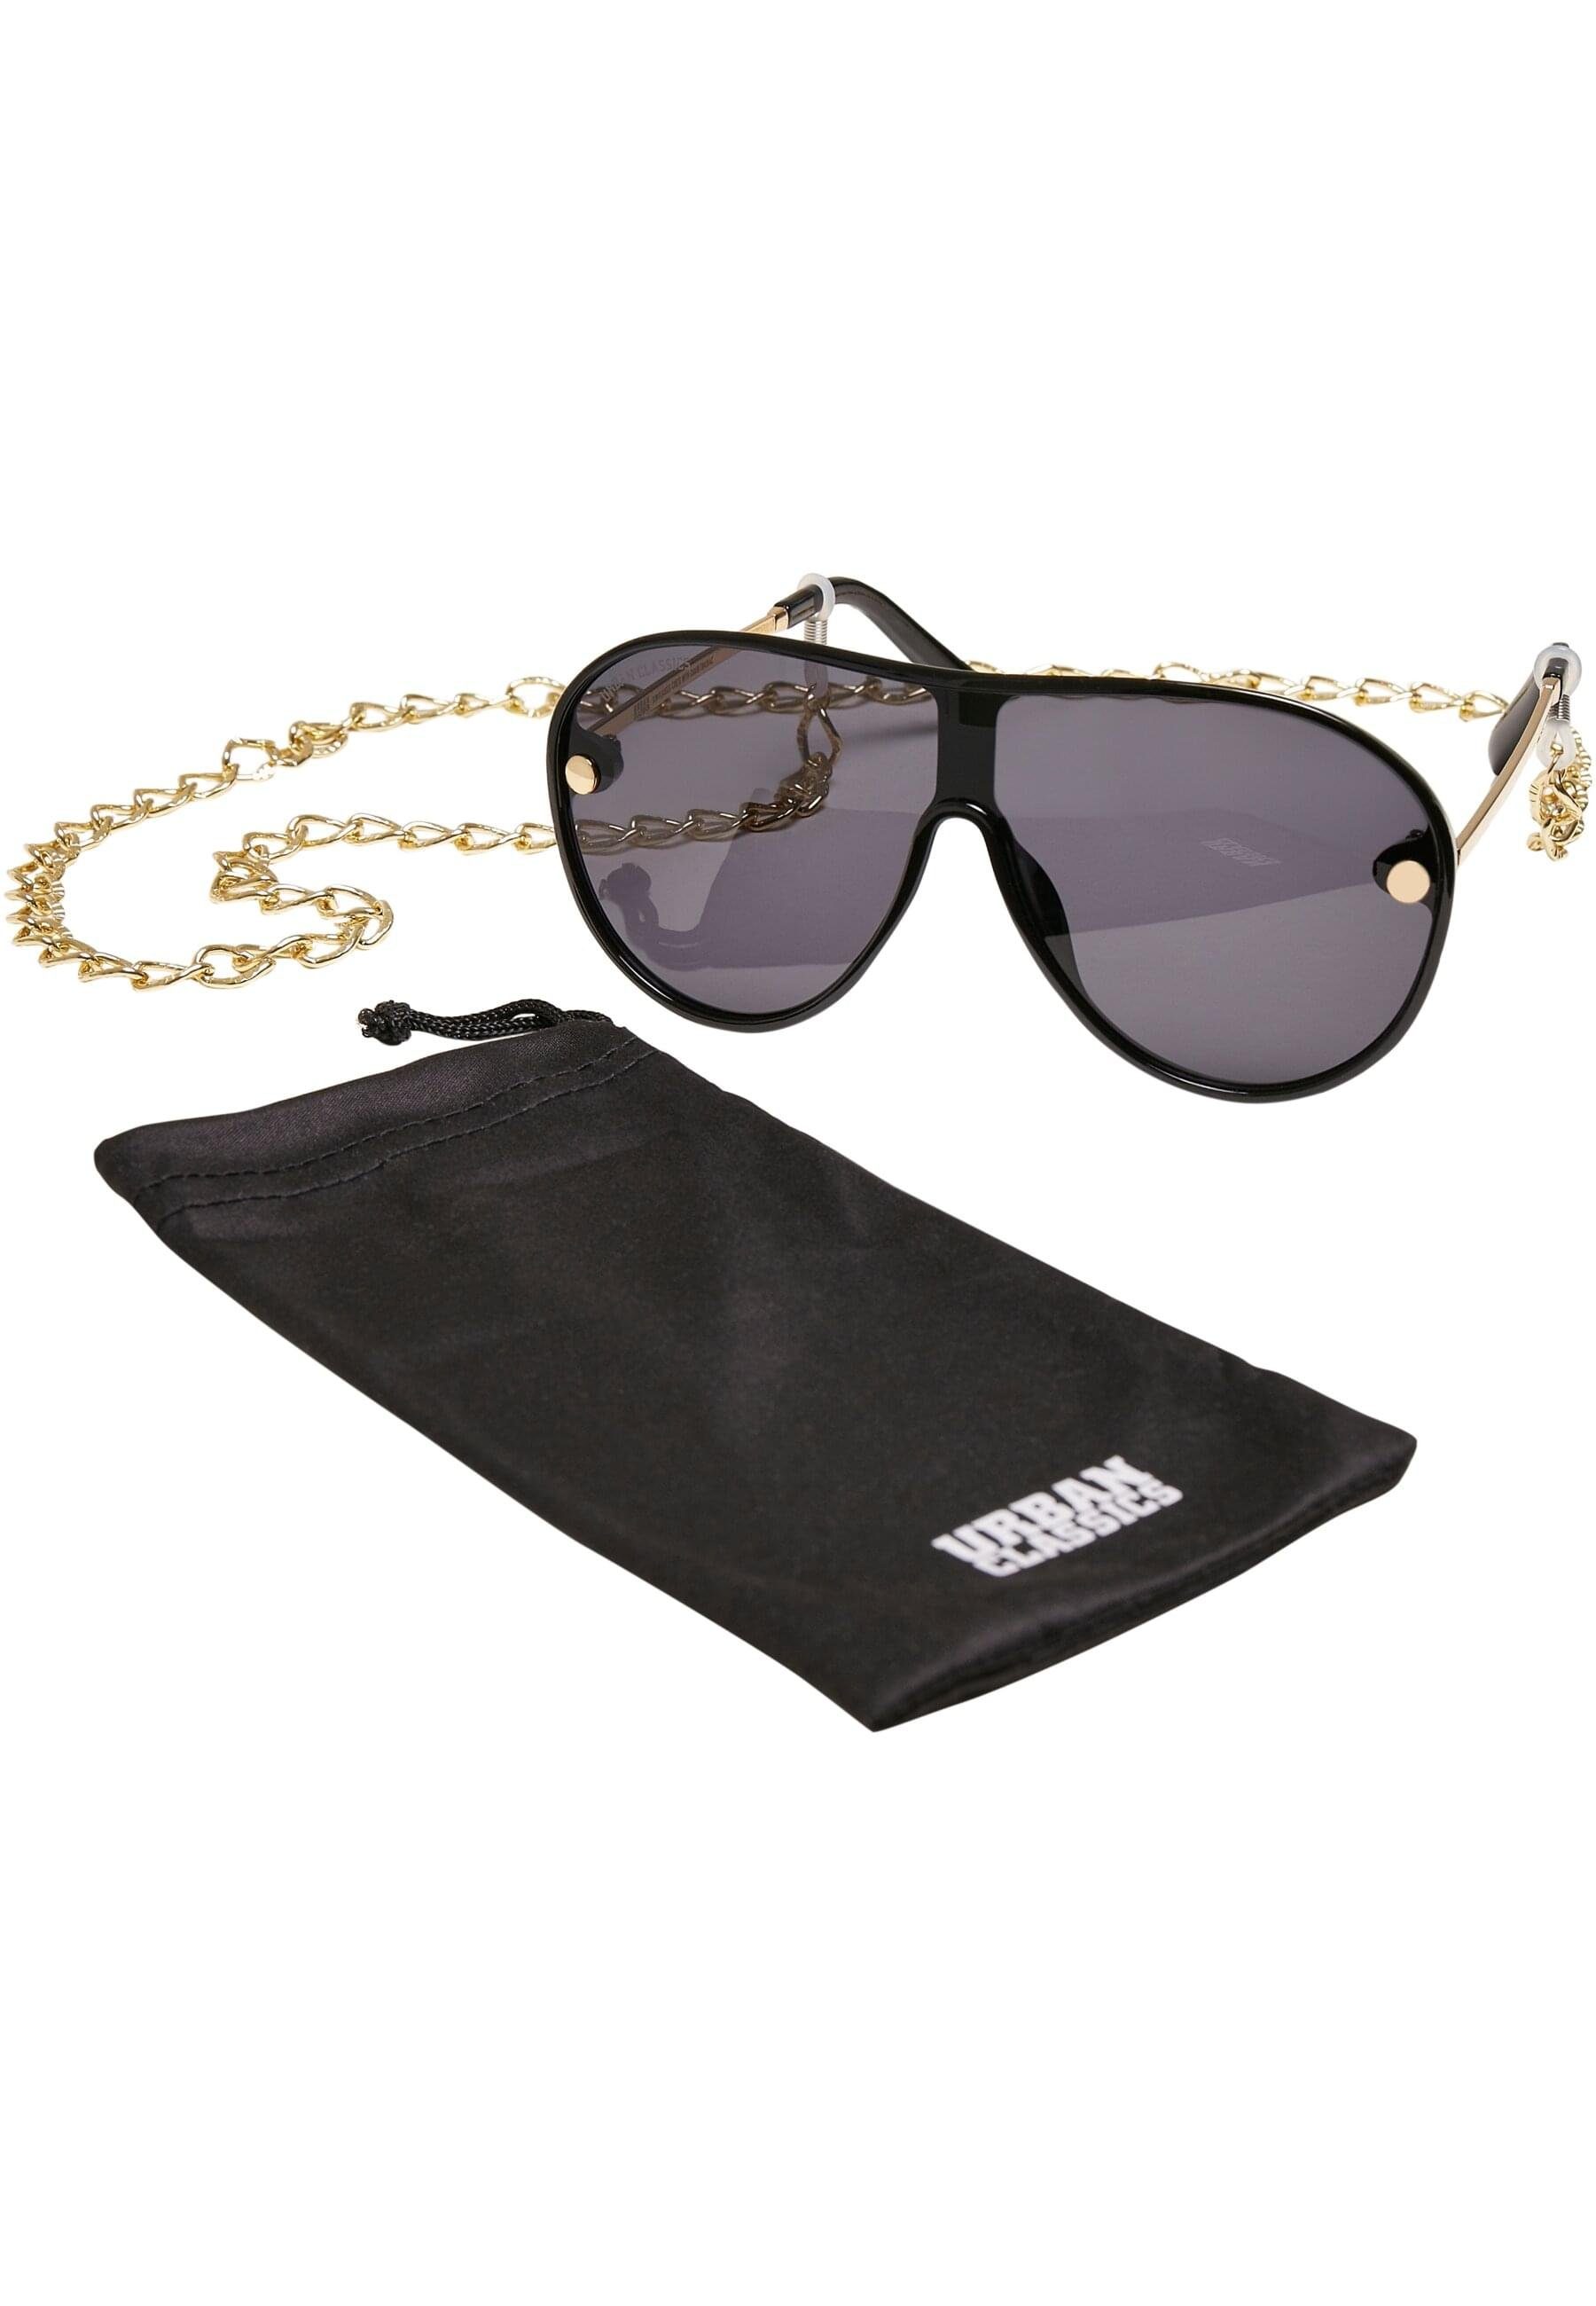 URBAN Sunglasses Naxos CLASSICS Unisex With Chain Sonnenbrille